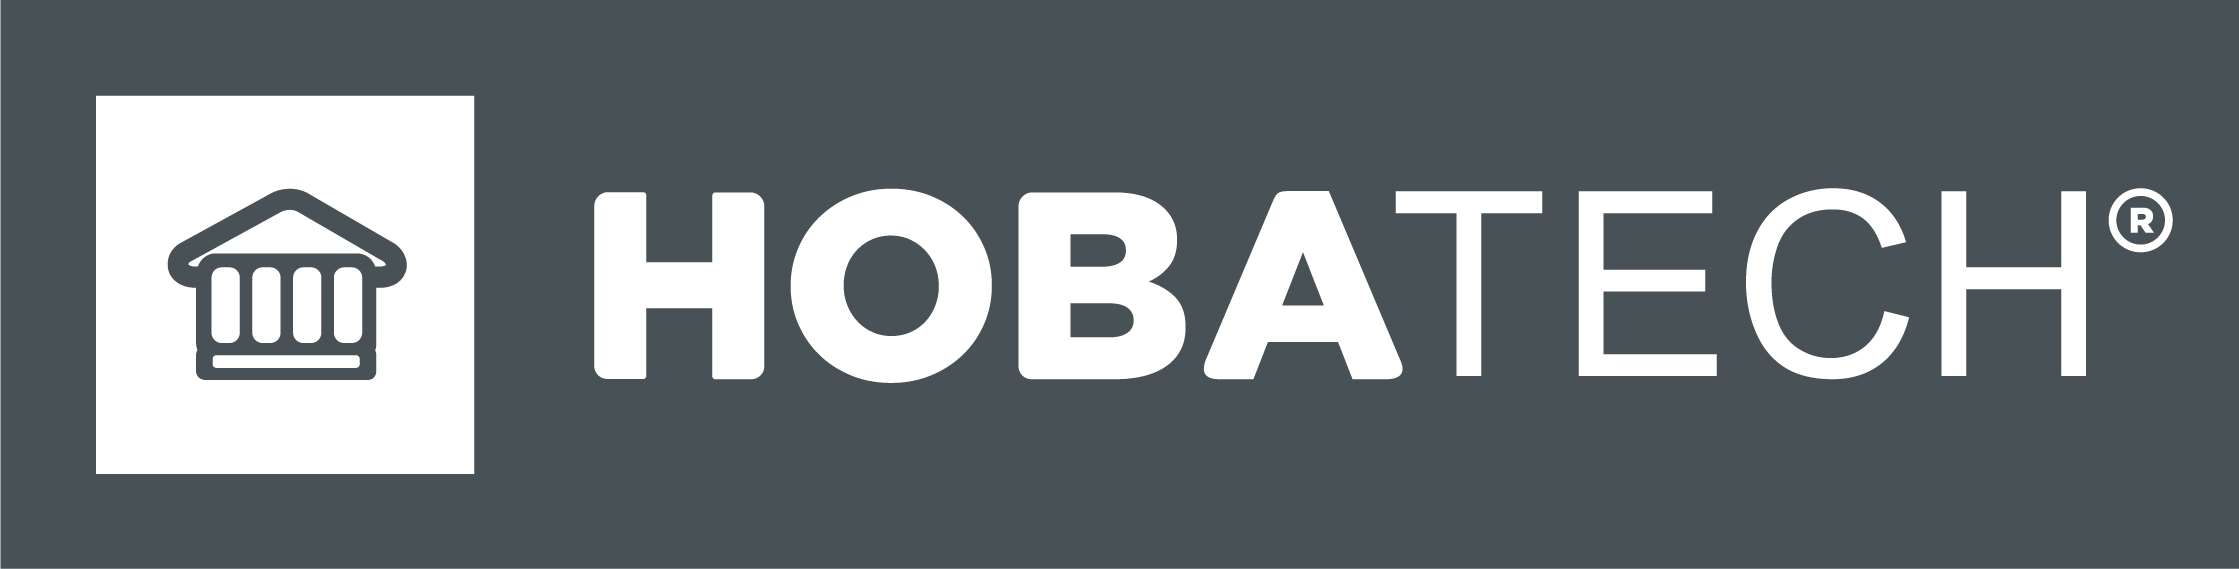 HOBATech-Logo